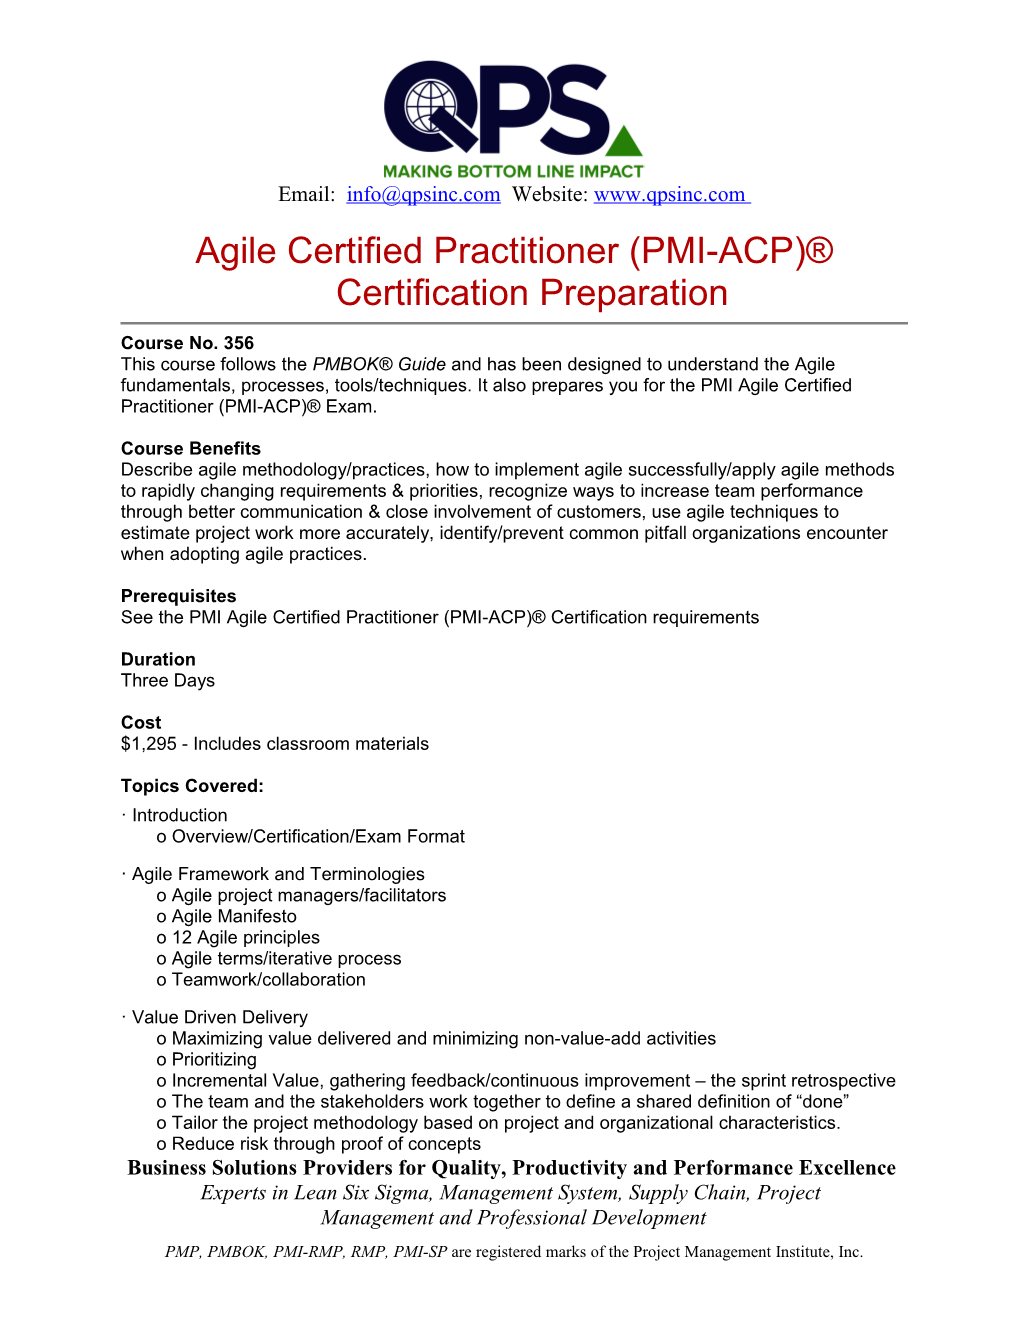 Agile Certified Practitioner (PMI-ACP) Certification Preparation